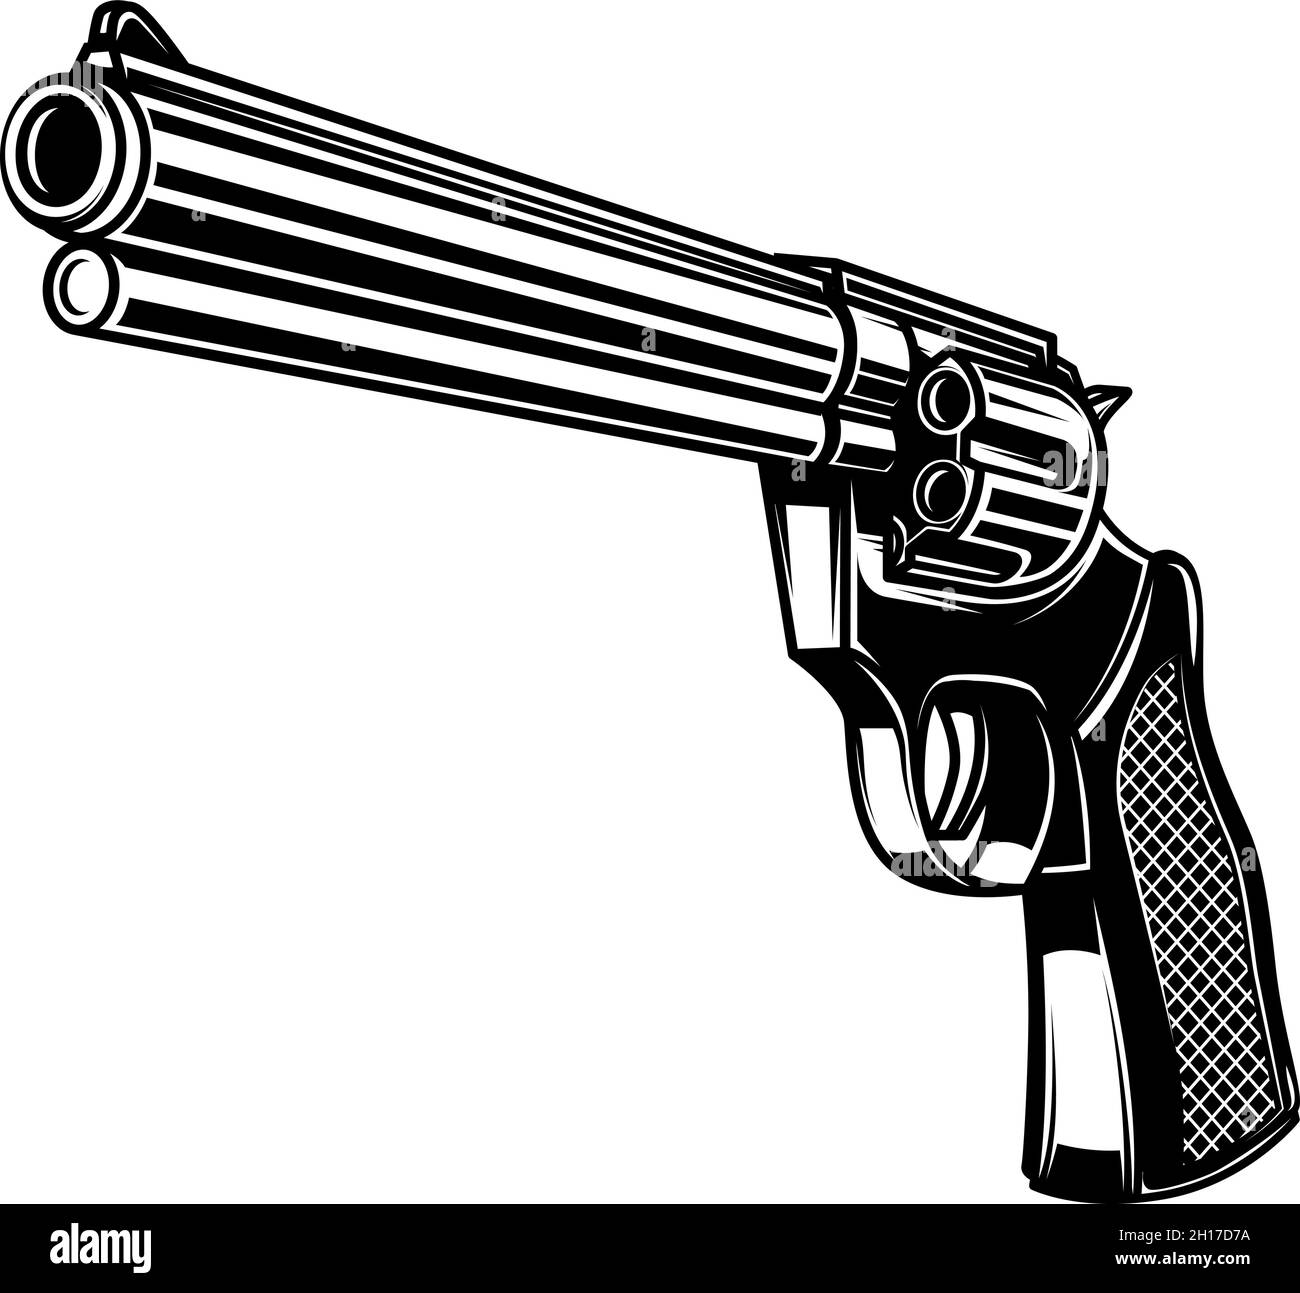 Illustration des Revolvers im monochromen Stil. Gestaltungselement für Logo, Etikett, Schild, Poster, Karte. Vektorgrafik Stock Vektor